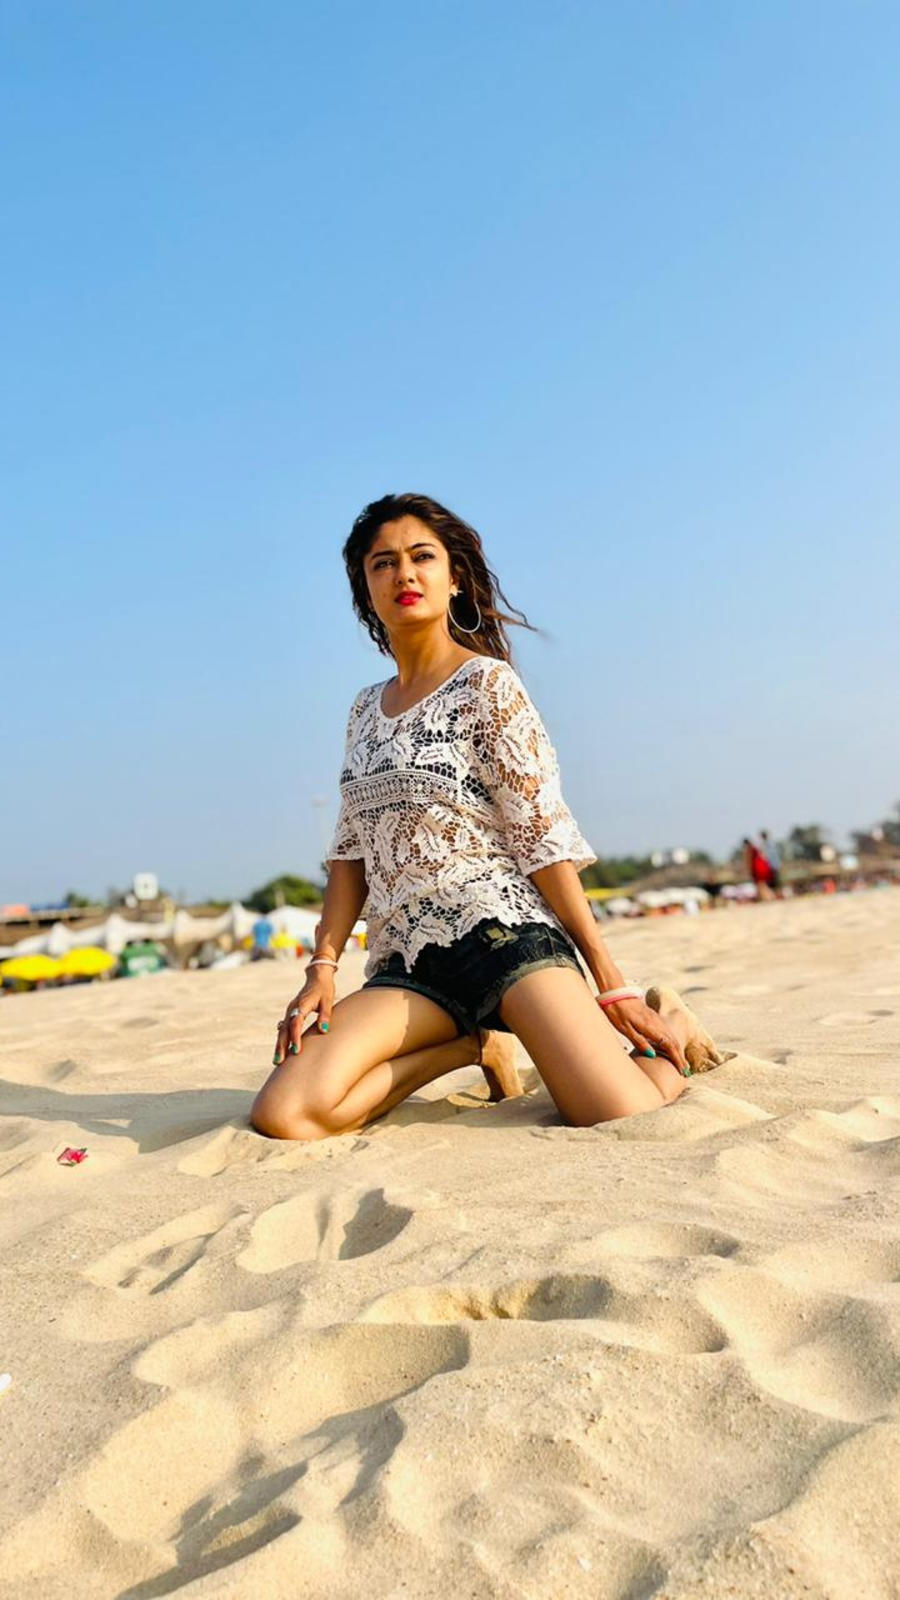 Alluring Poses Of Neha Sharma From Goa Beach